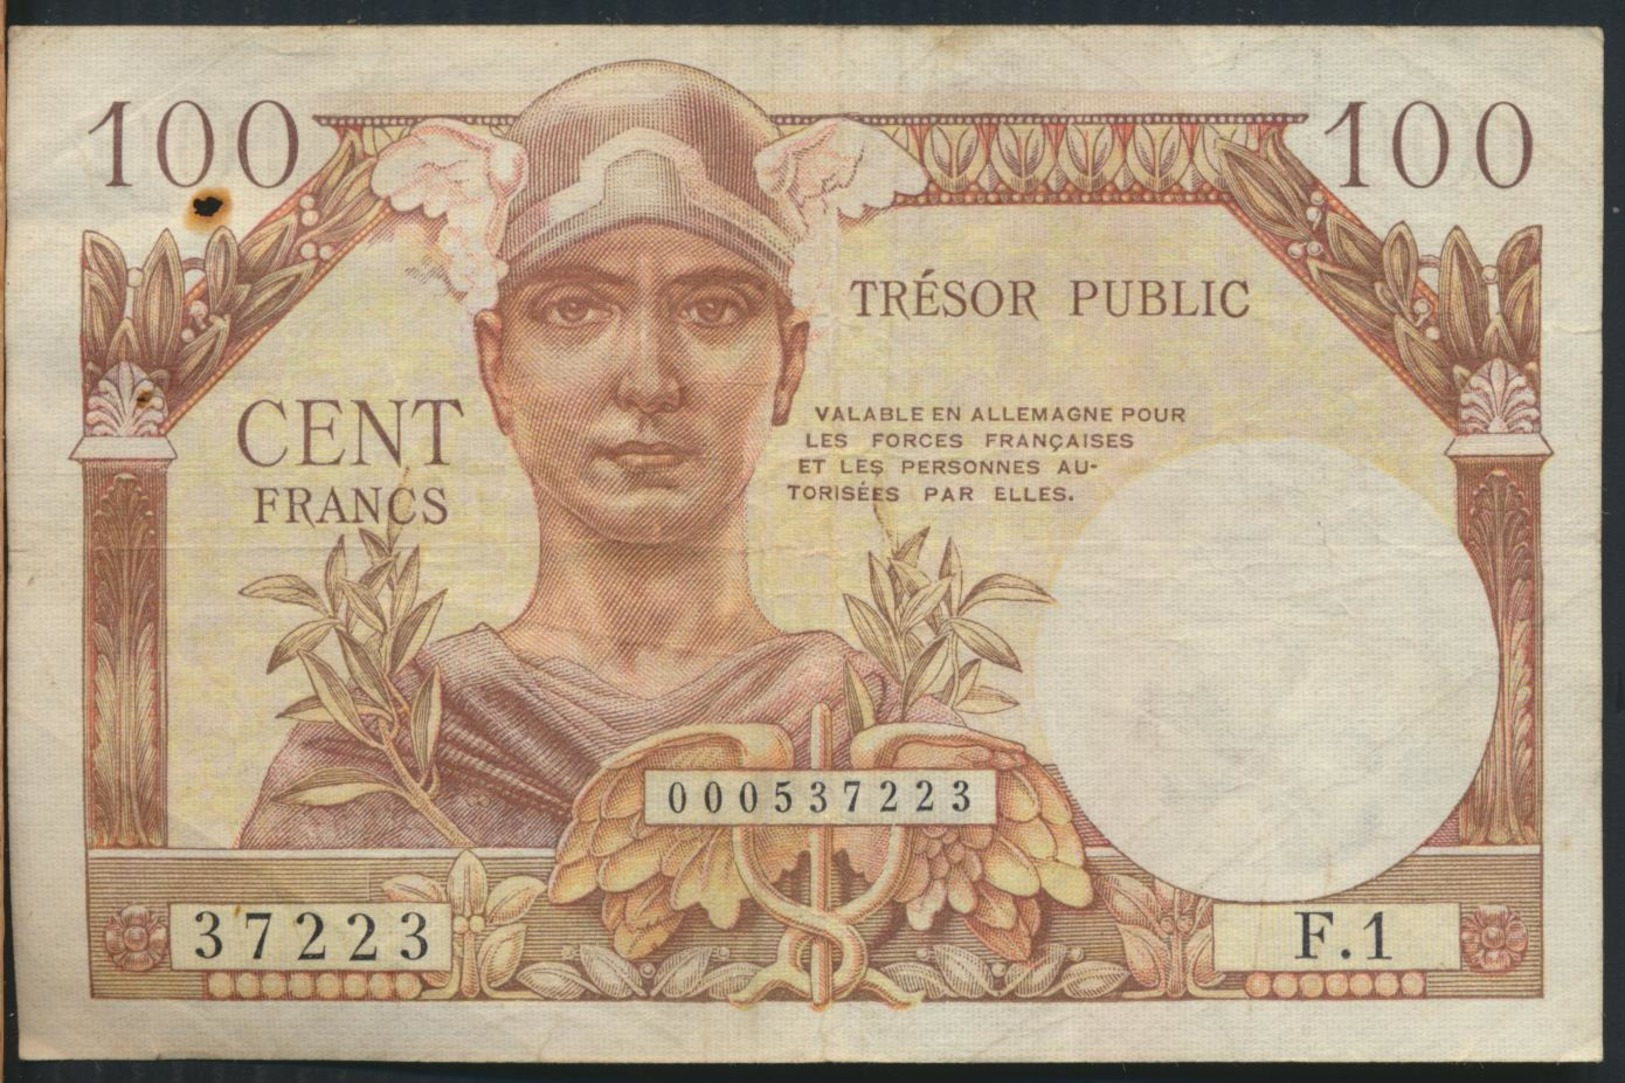 °°° FRANCE - 100 FRANCS TRESOR PUBLIC °°° - 1955-1963 Tesoro Público